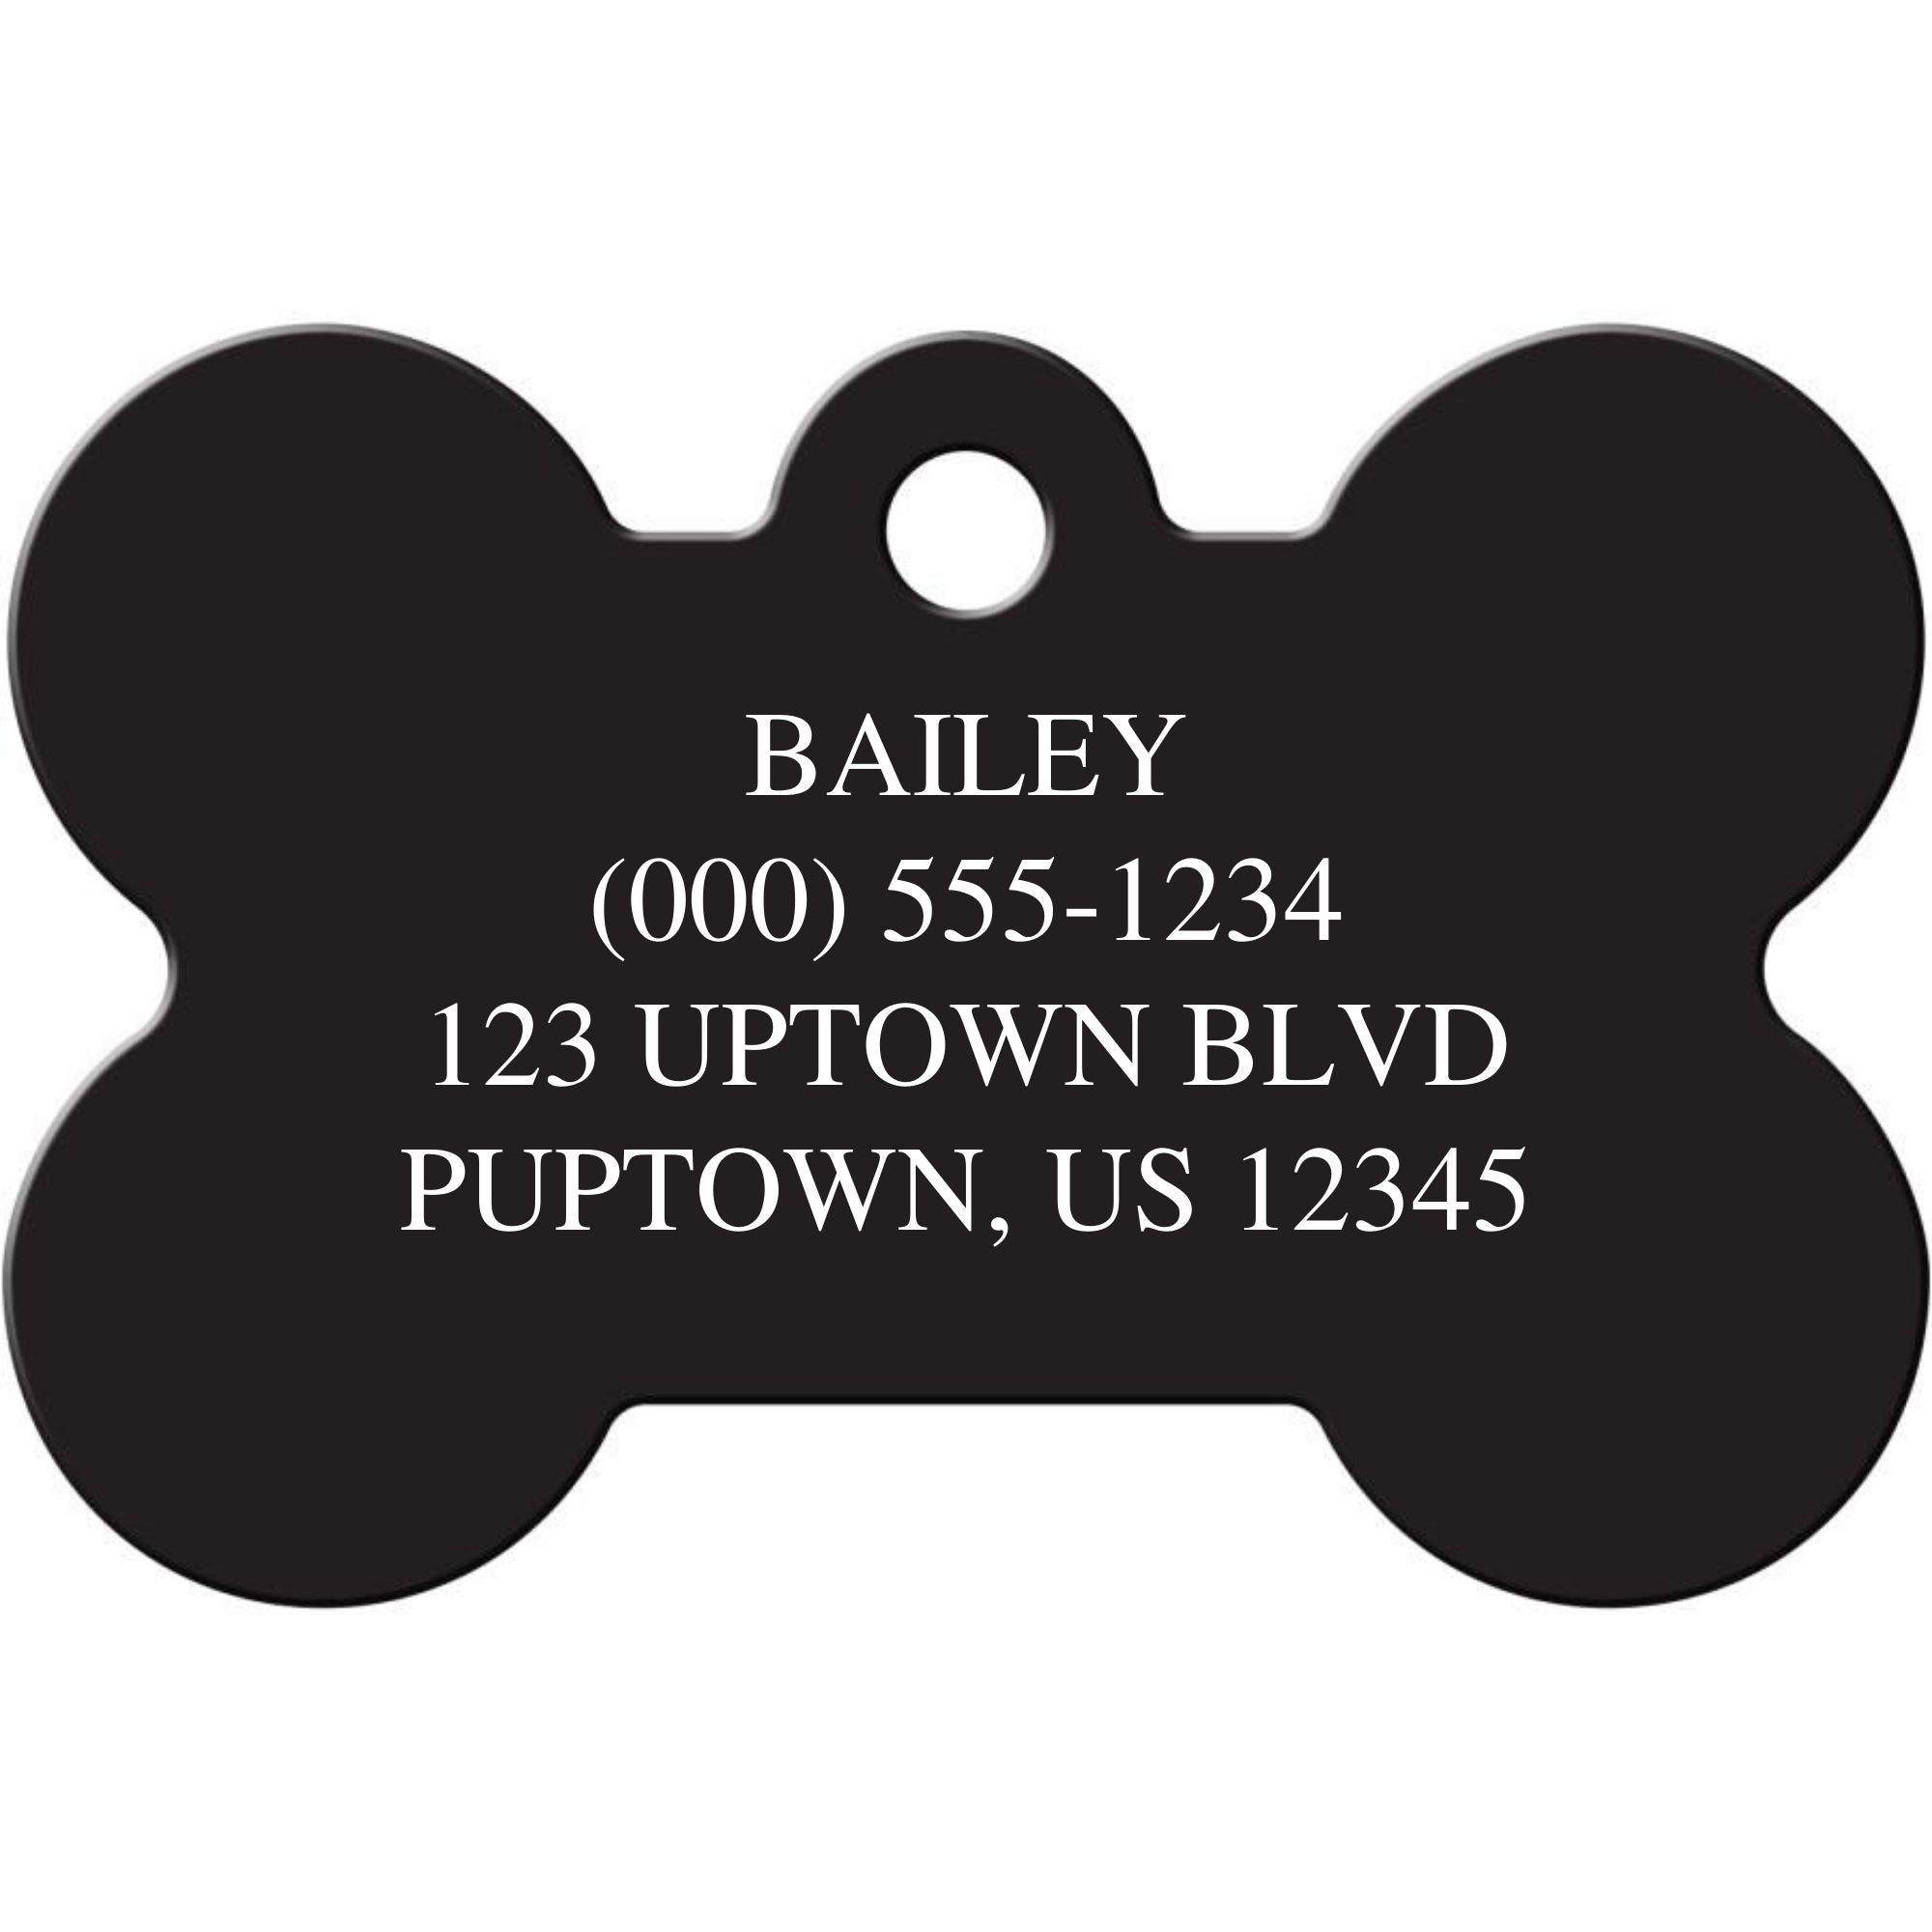 Washington CAPITALS PET ID TAG Personalized Any Name Dog Tag